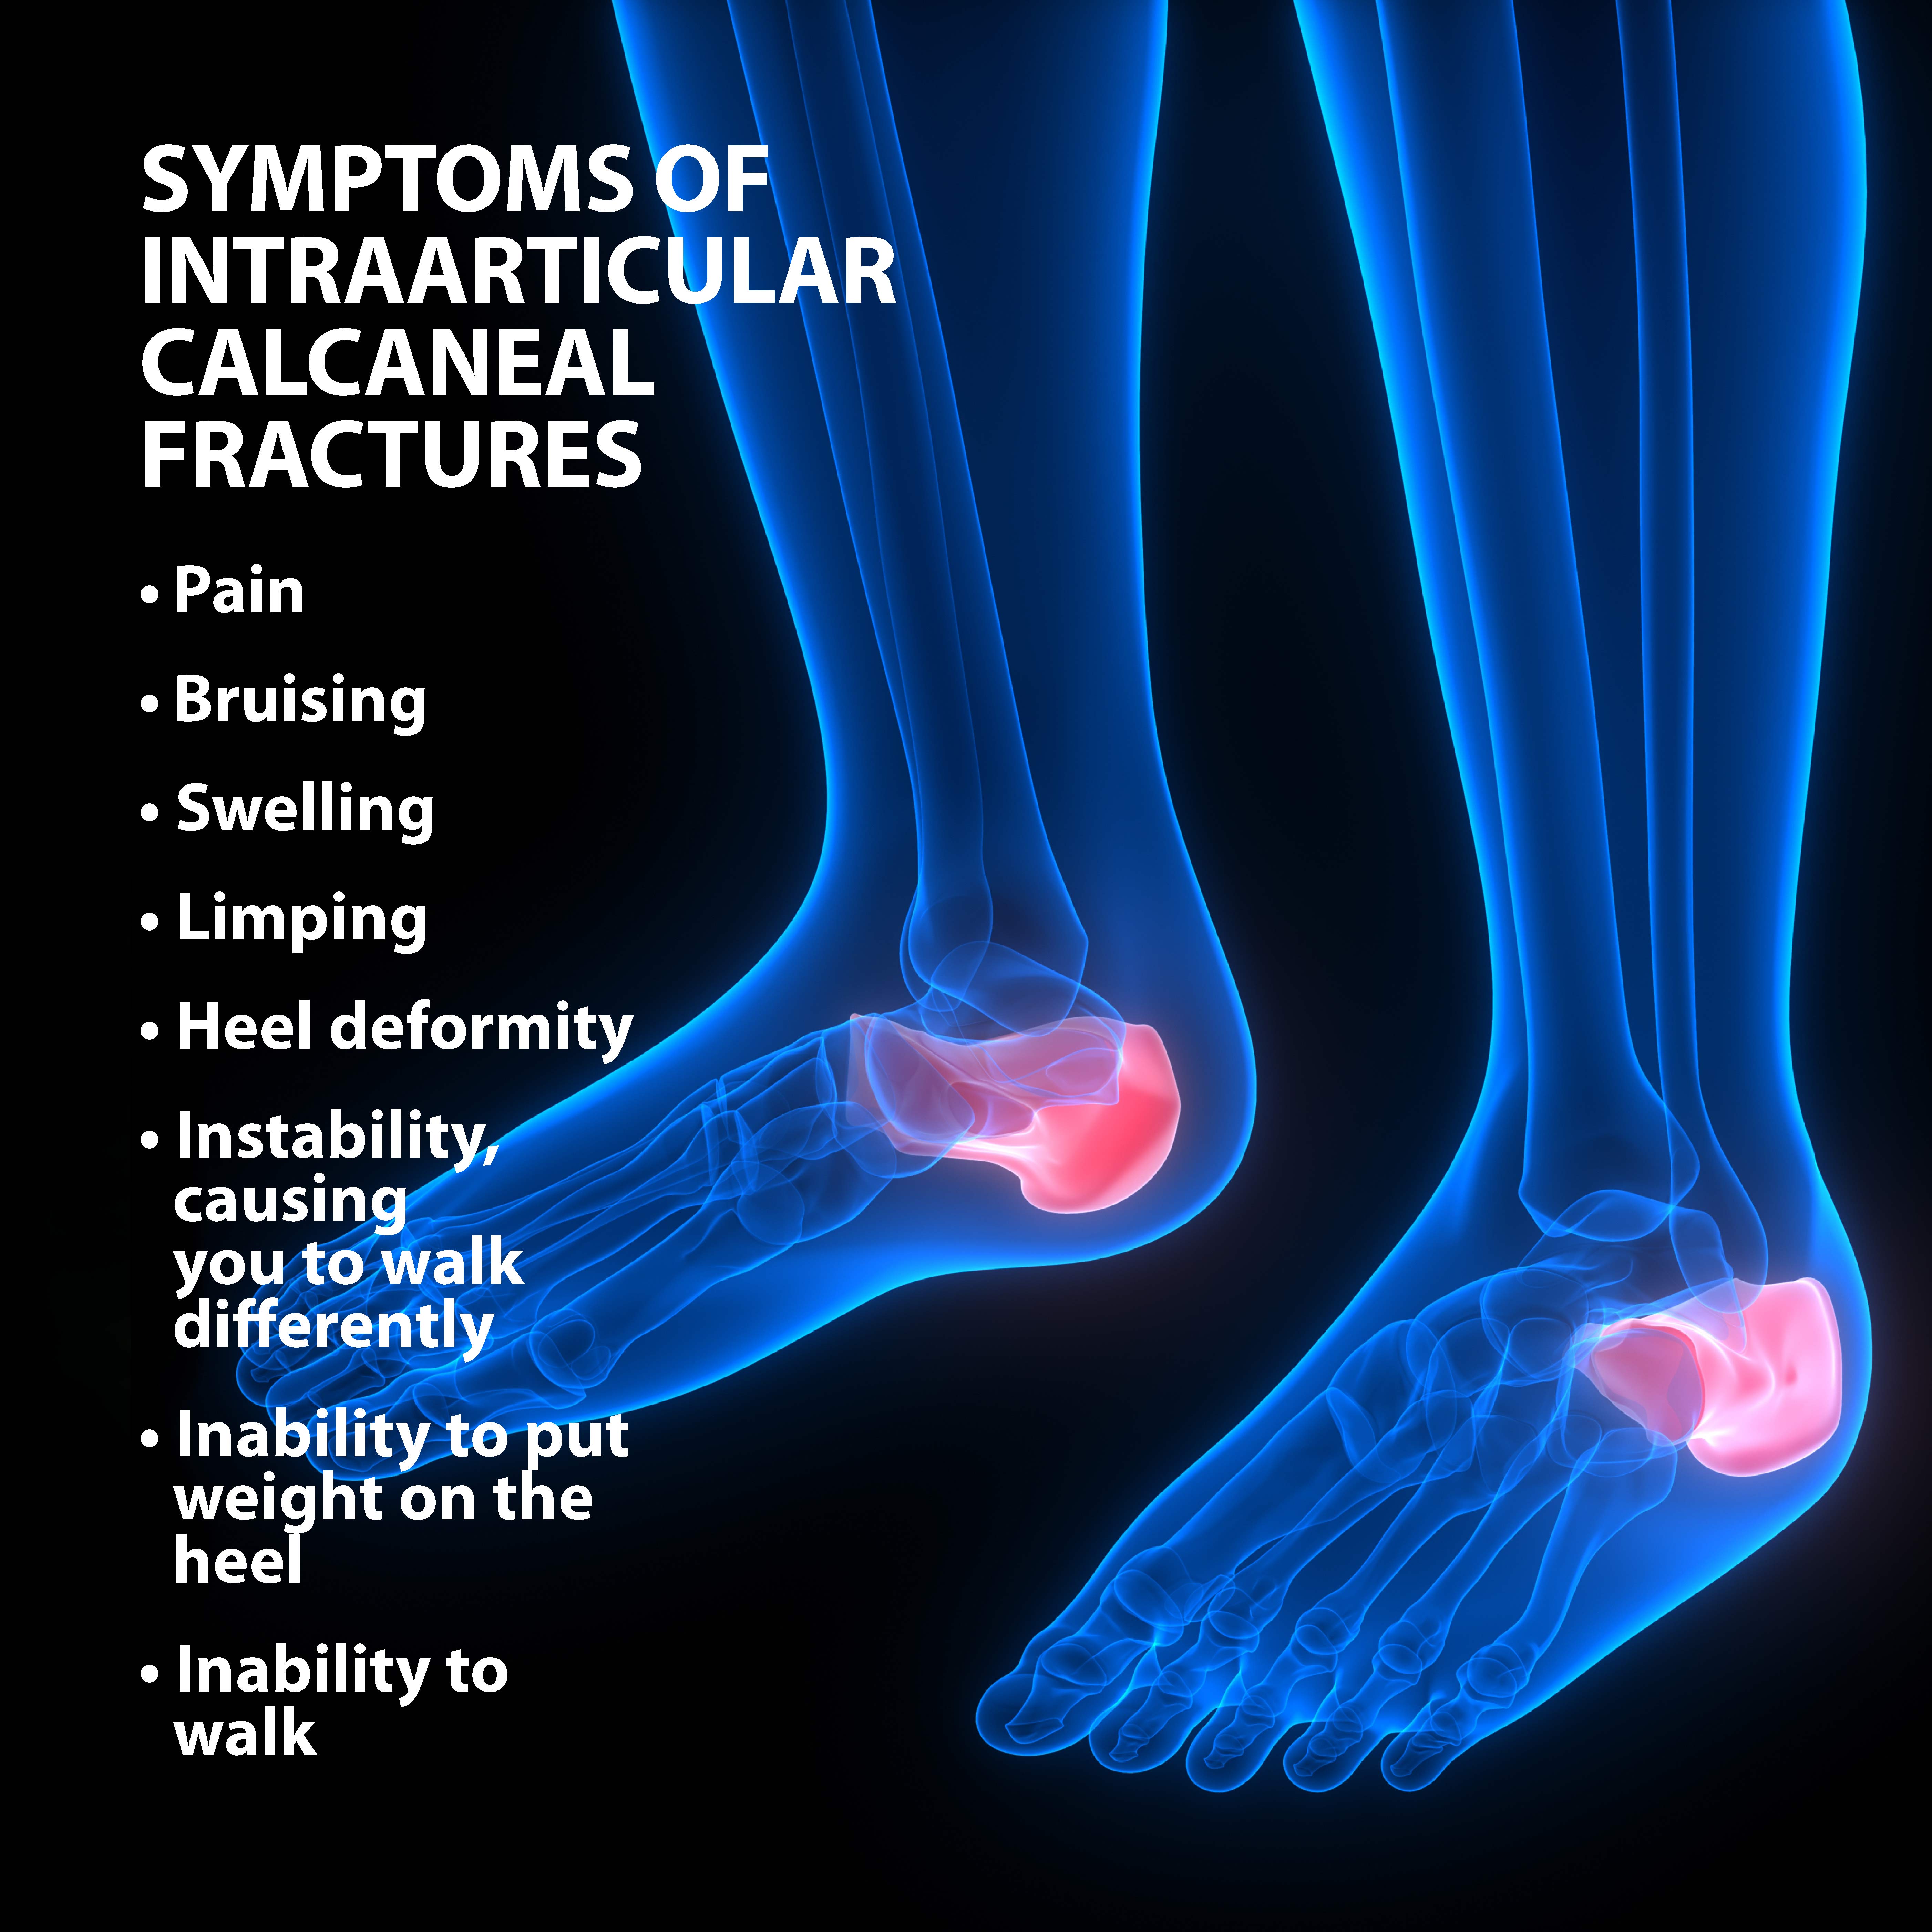 Shattered Calcaneus (heel bone)